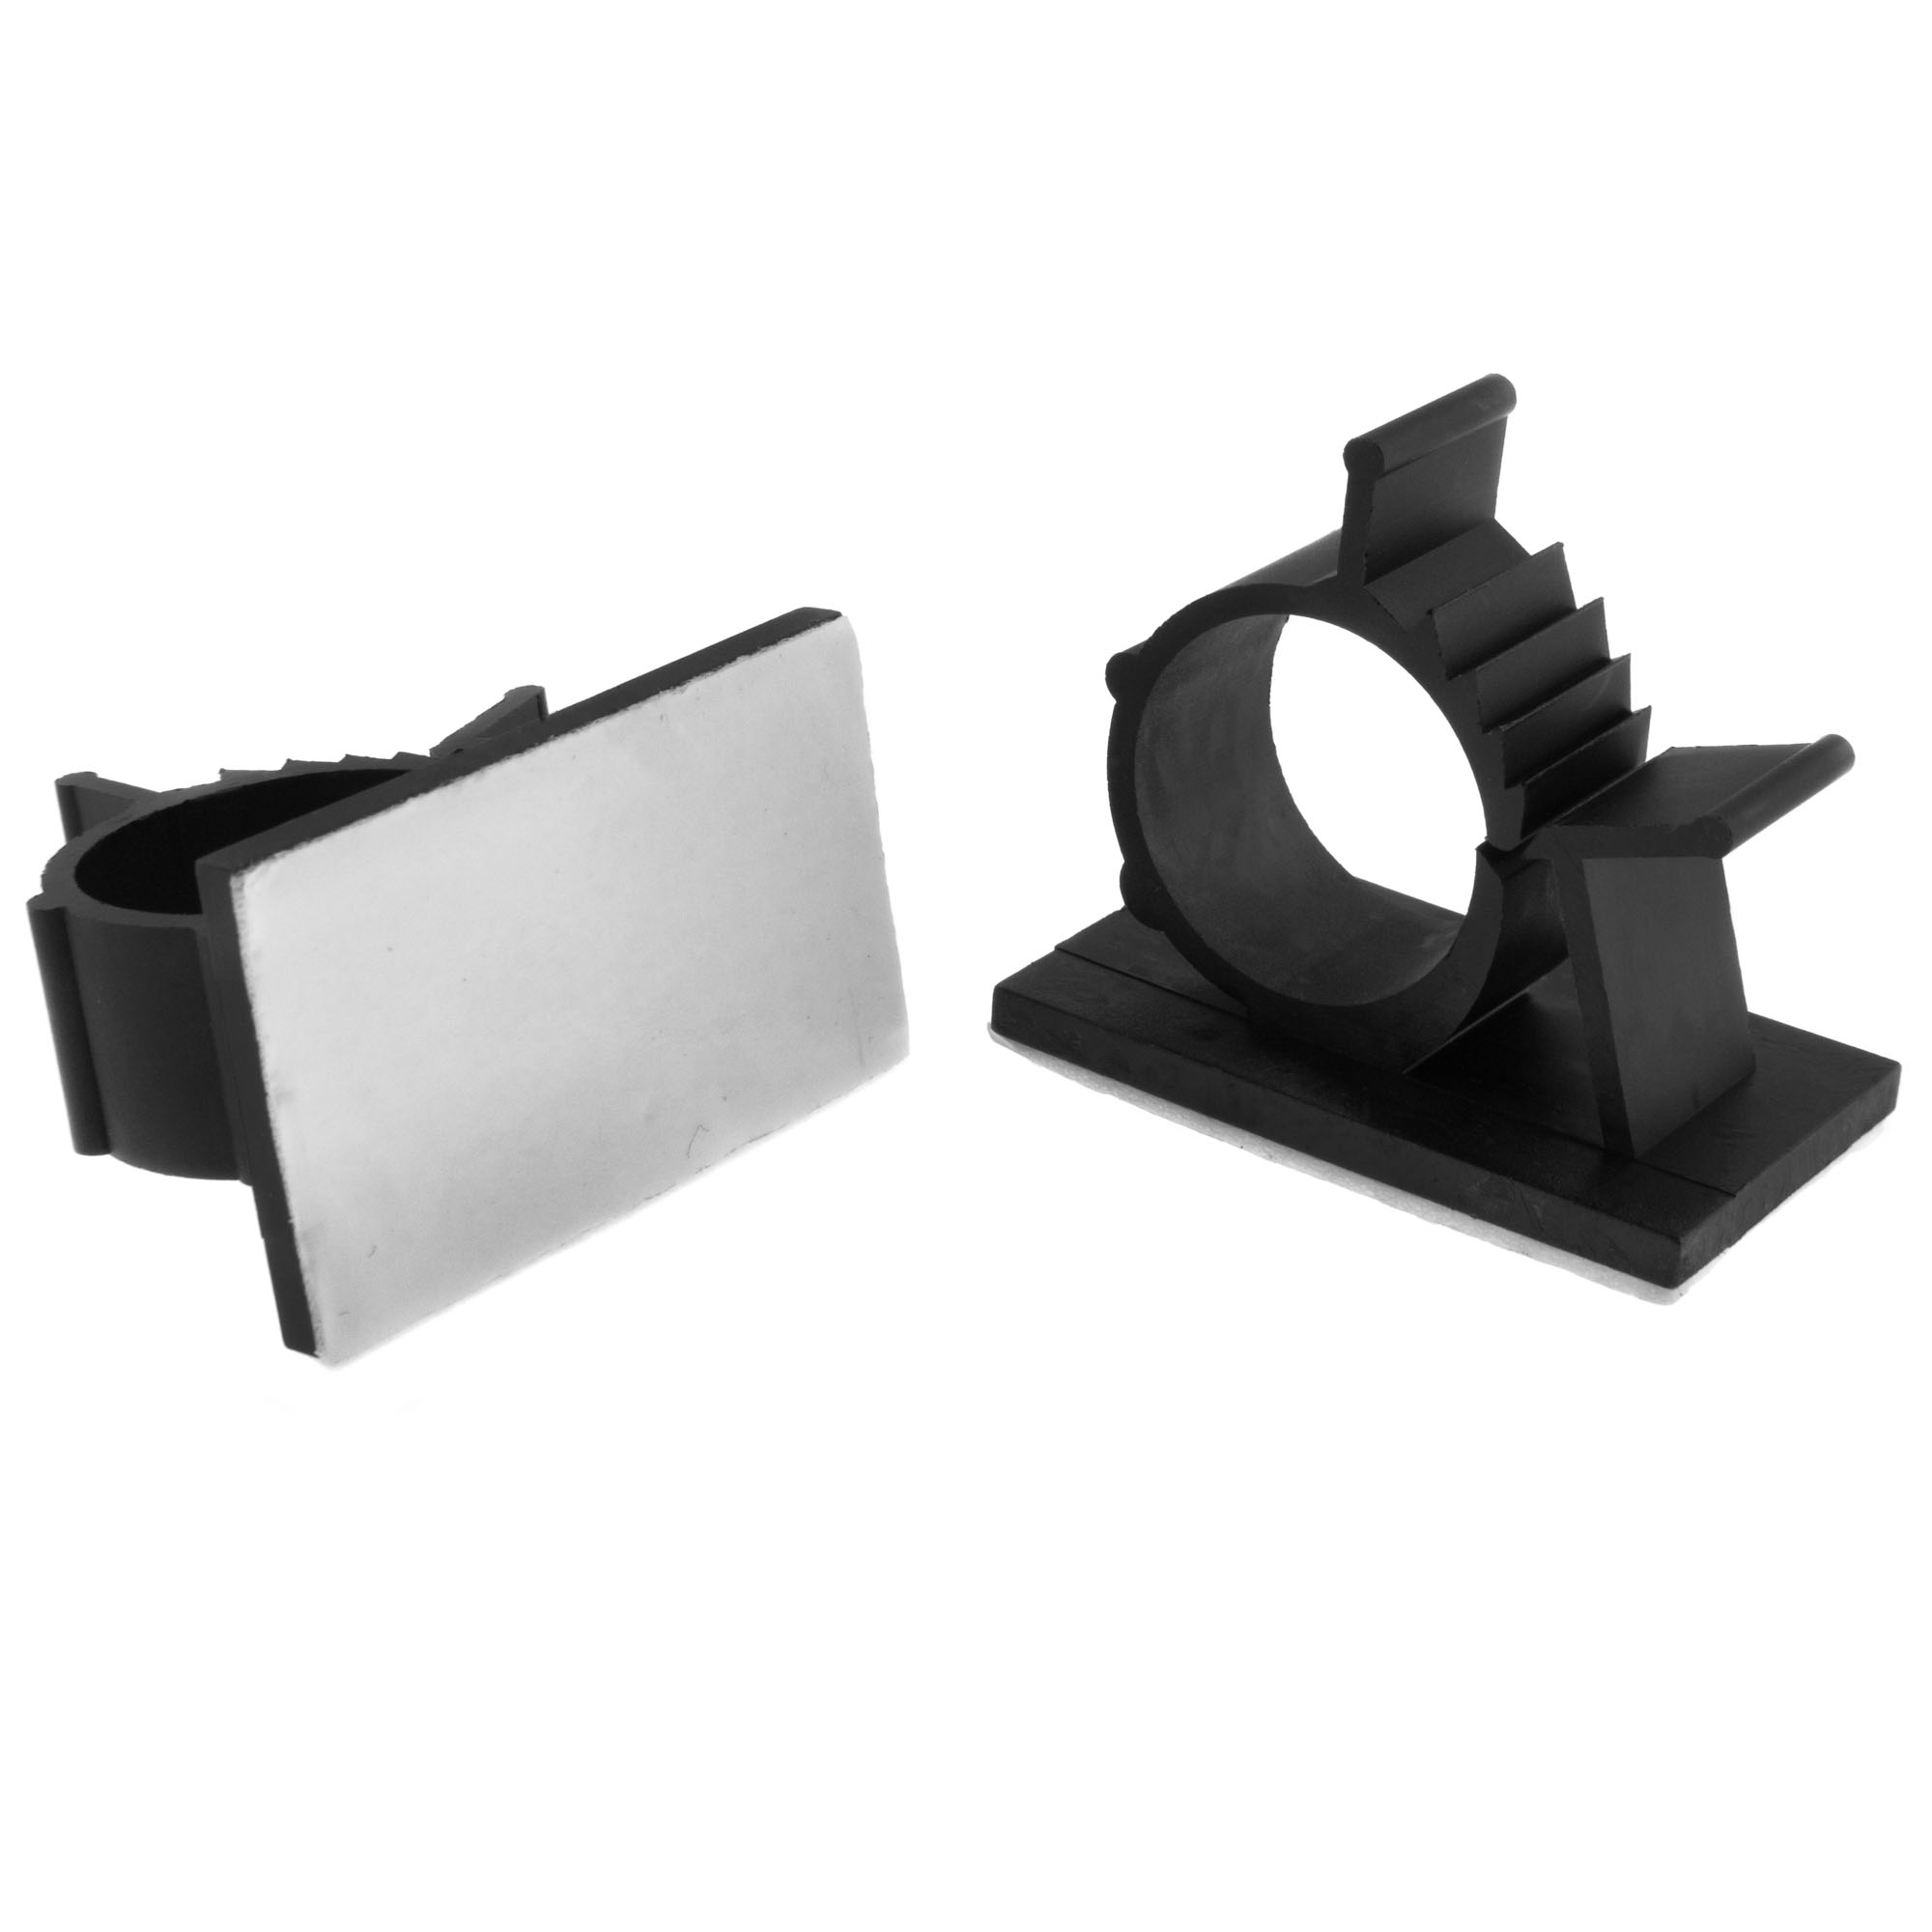 Cable clamp self-adhesive 10,0-12,5mm, black, 50PCS